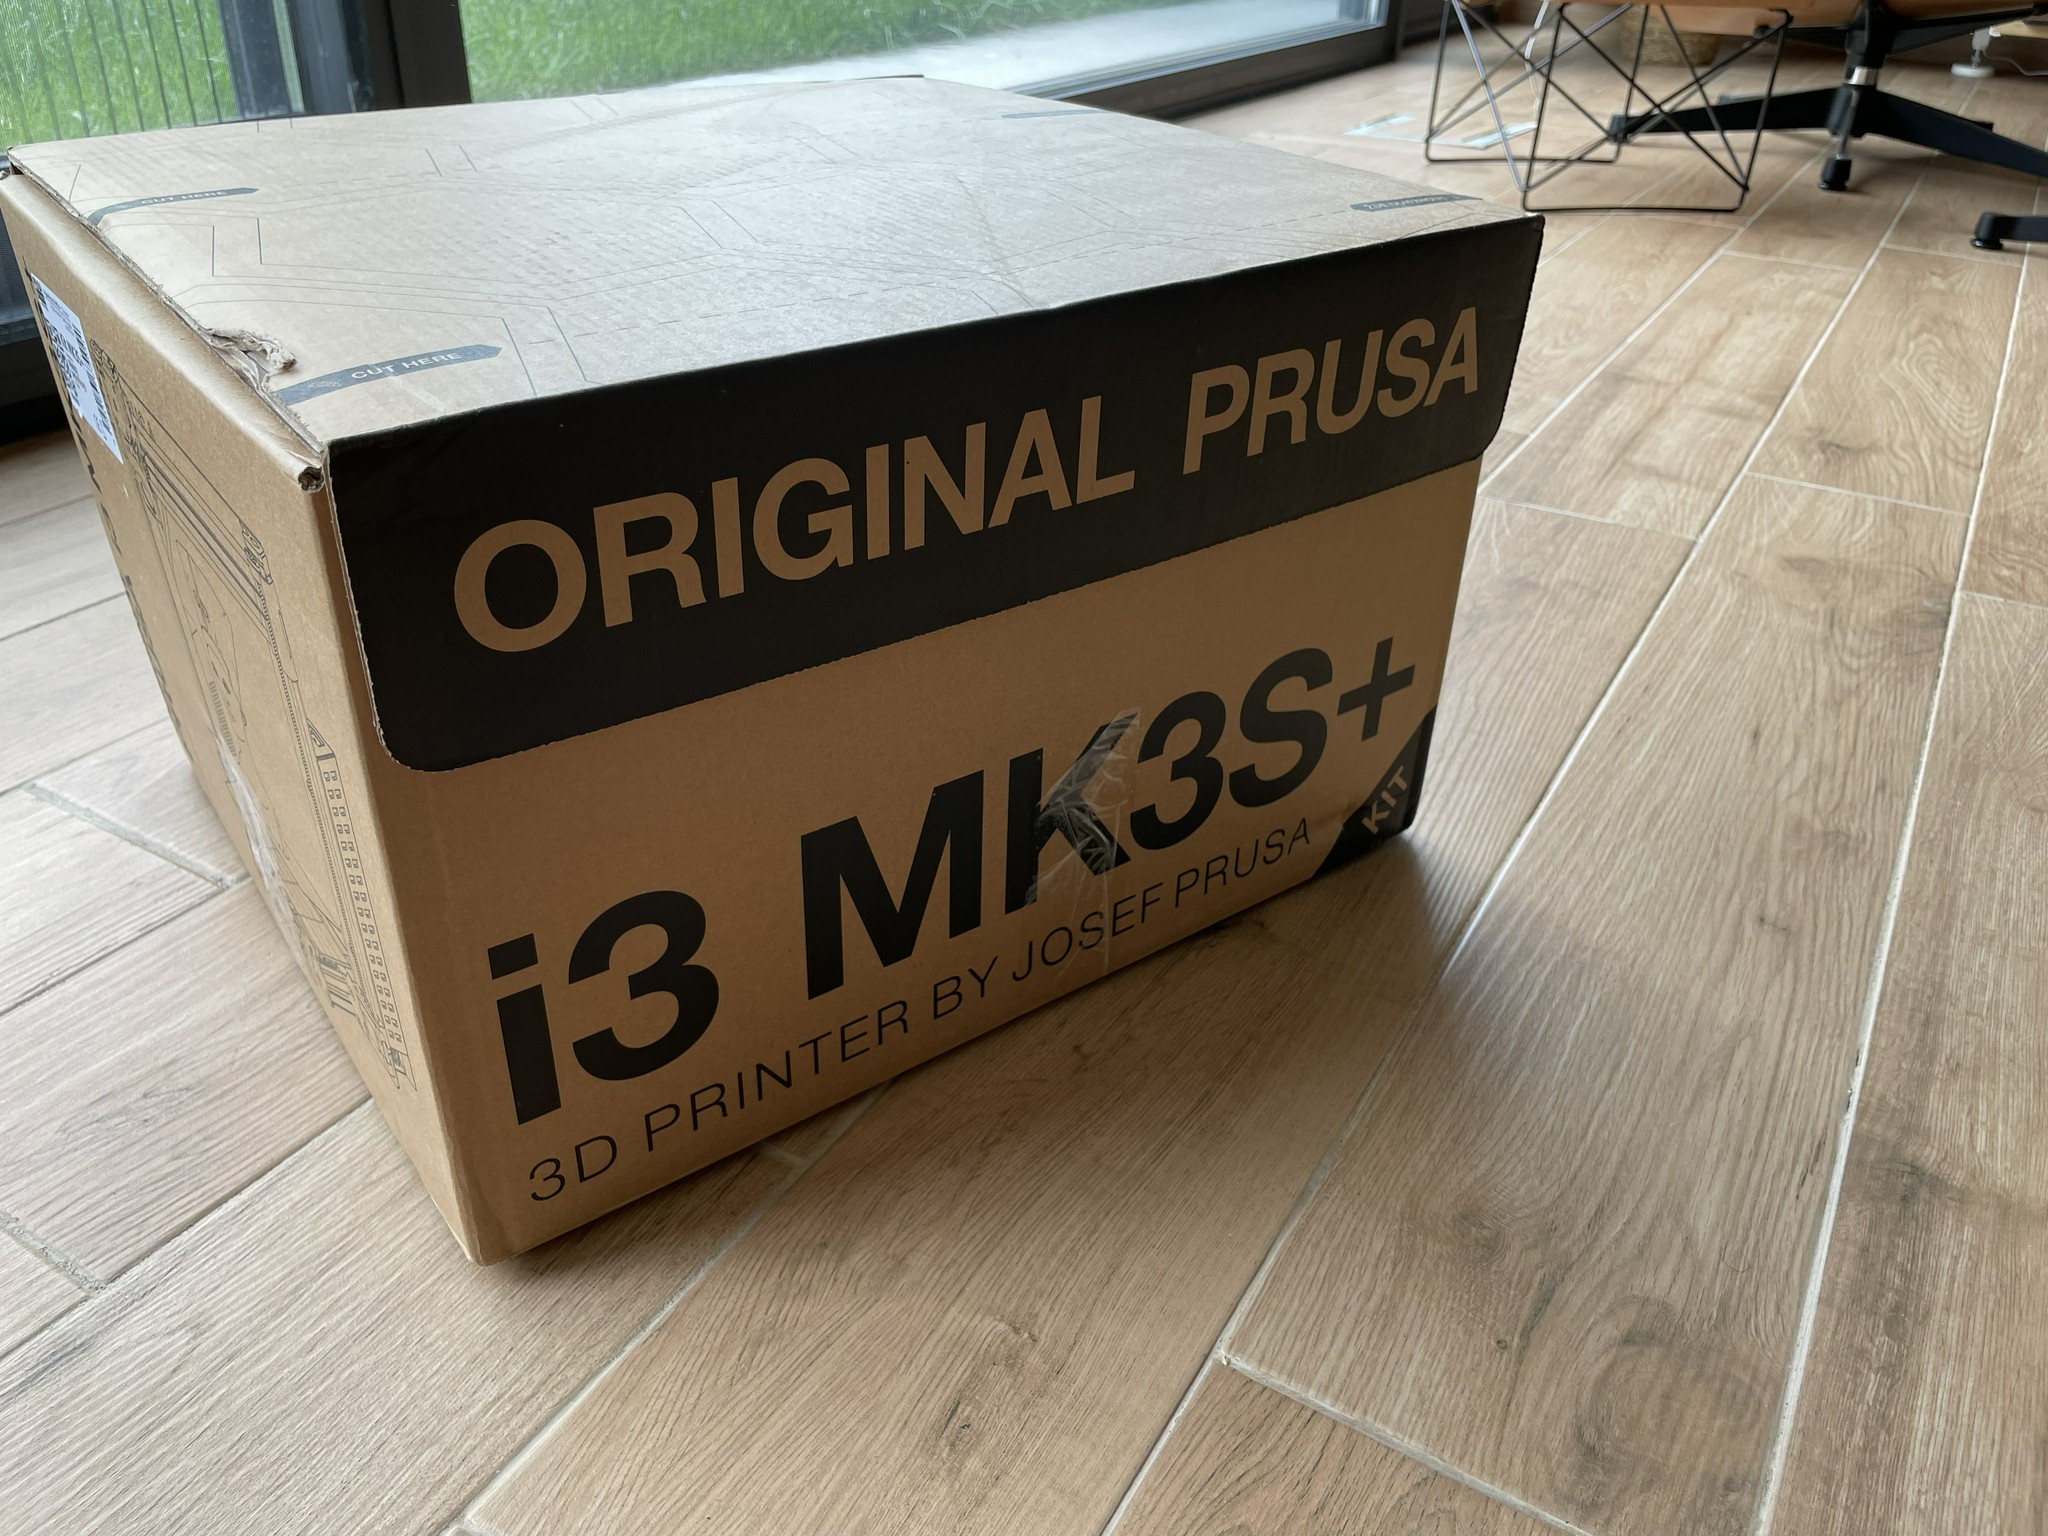 The Original Prusa i3 MK3S+ Kit